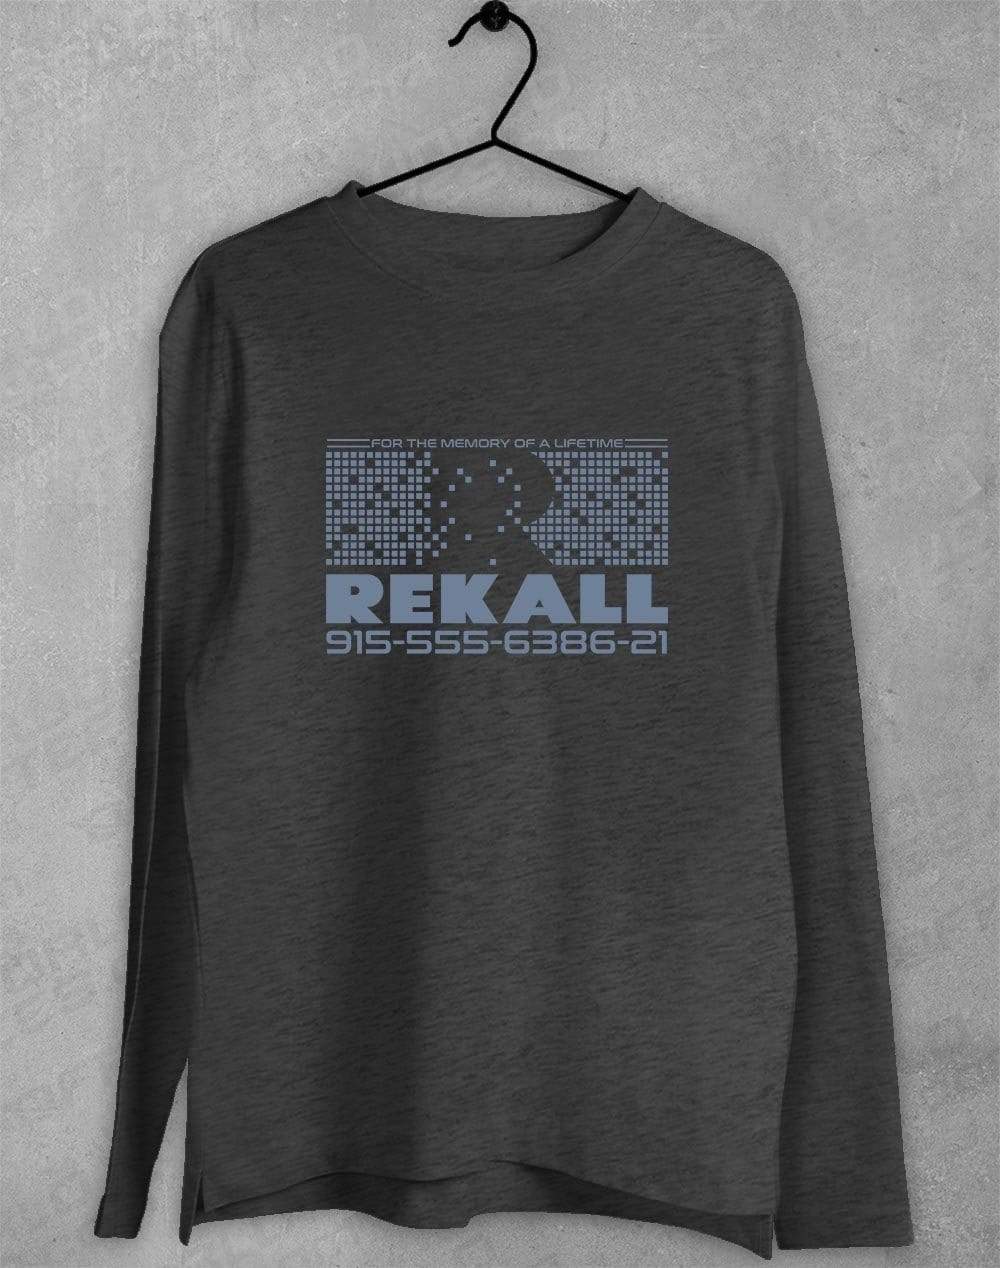 Rekall Long Sleeve T-Shirt S / Dark Heather  - Off World Tees